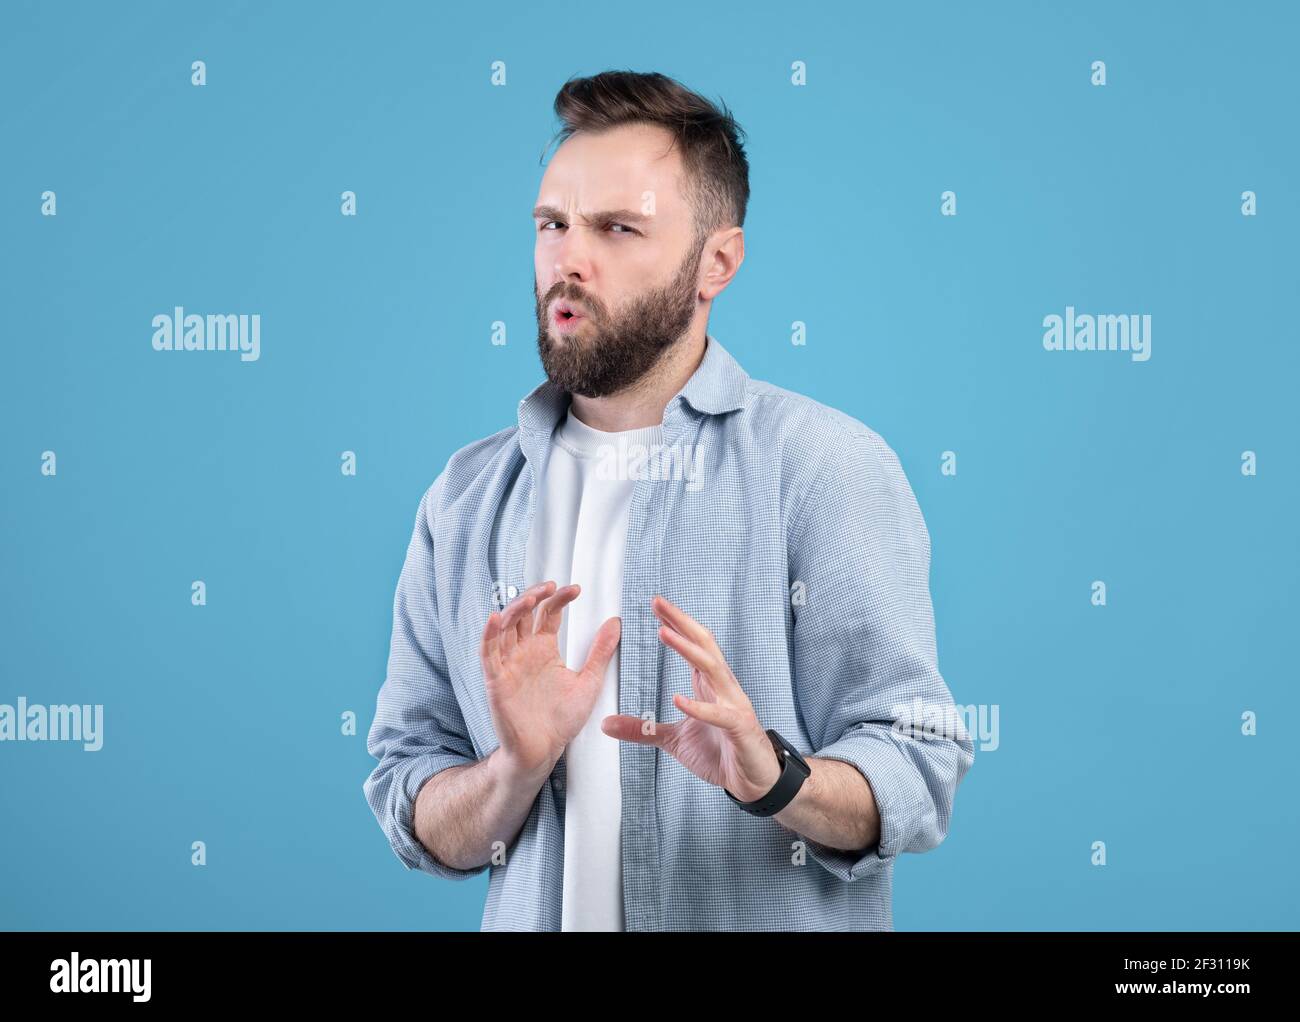 Disgustato giovane ragazzo rifiutando qualcosa, gesturing NO o STOP su sfondo blu studio Foto Stock